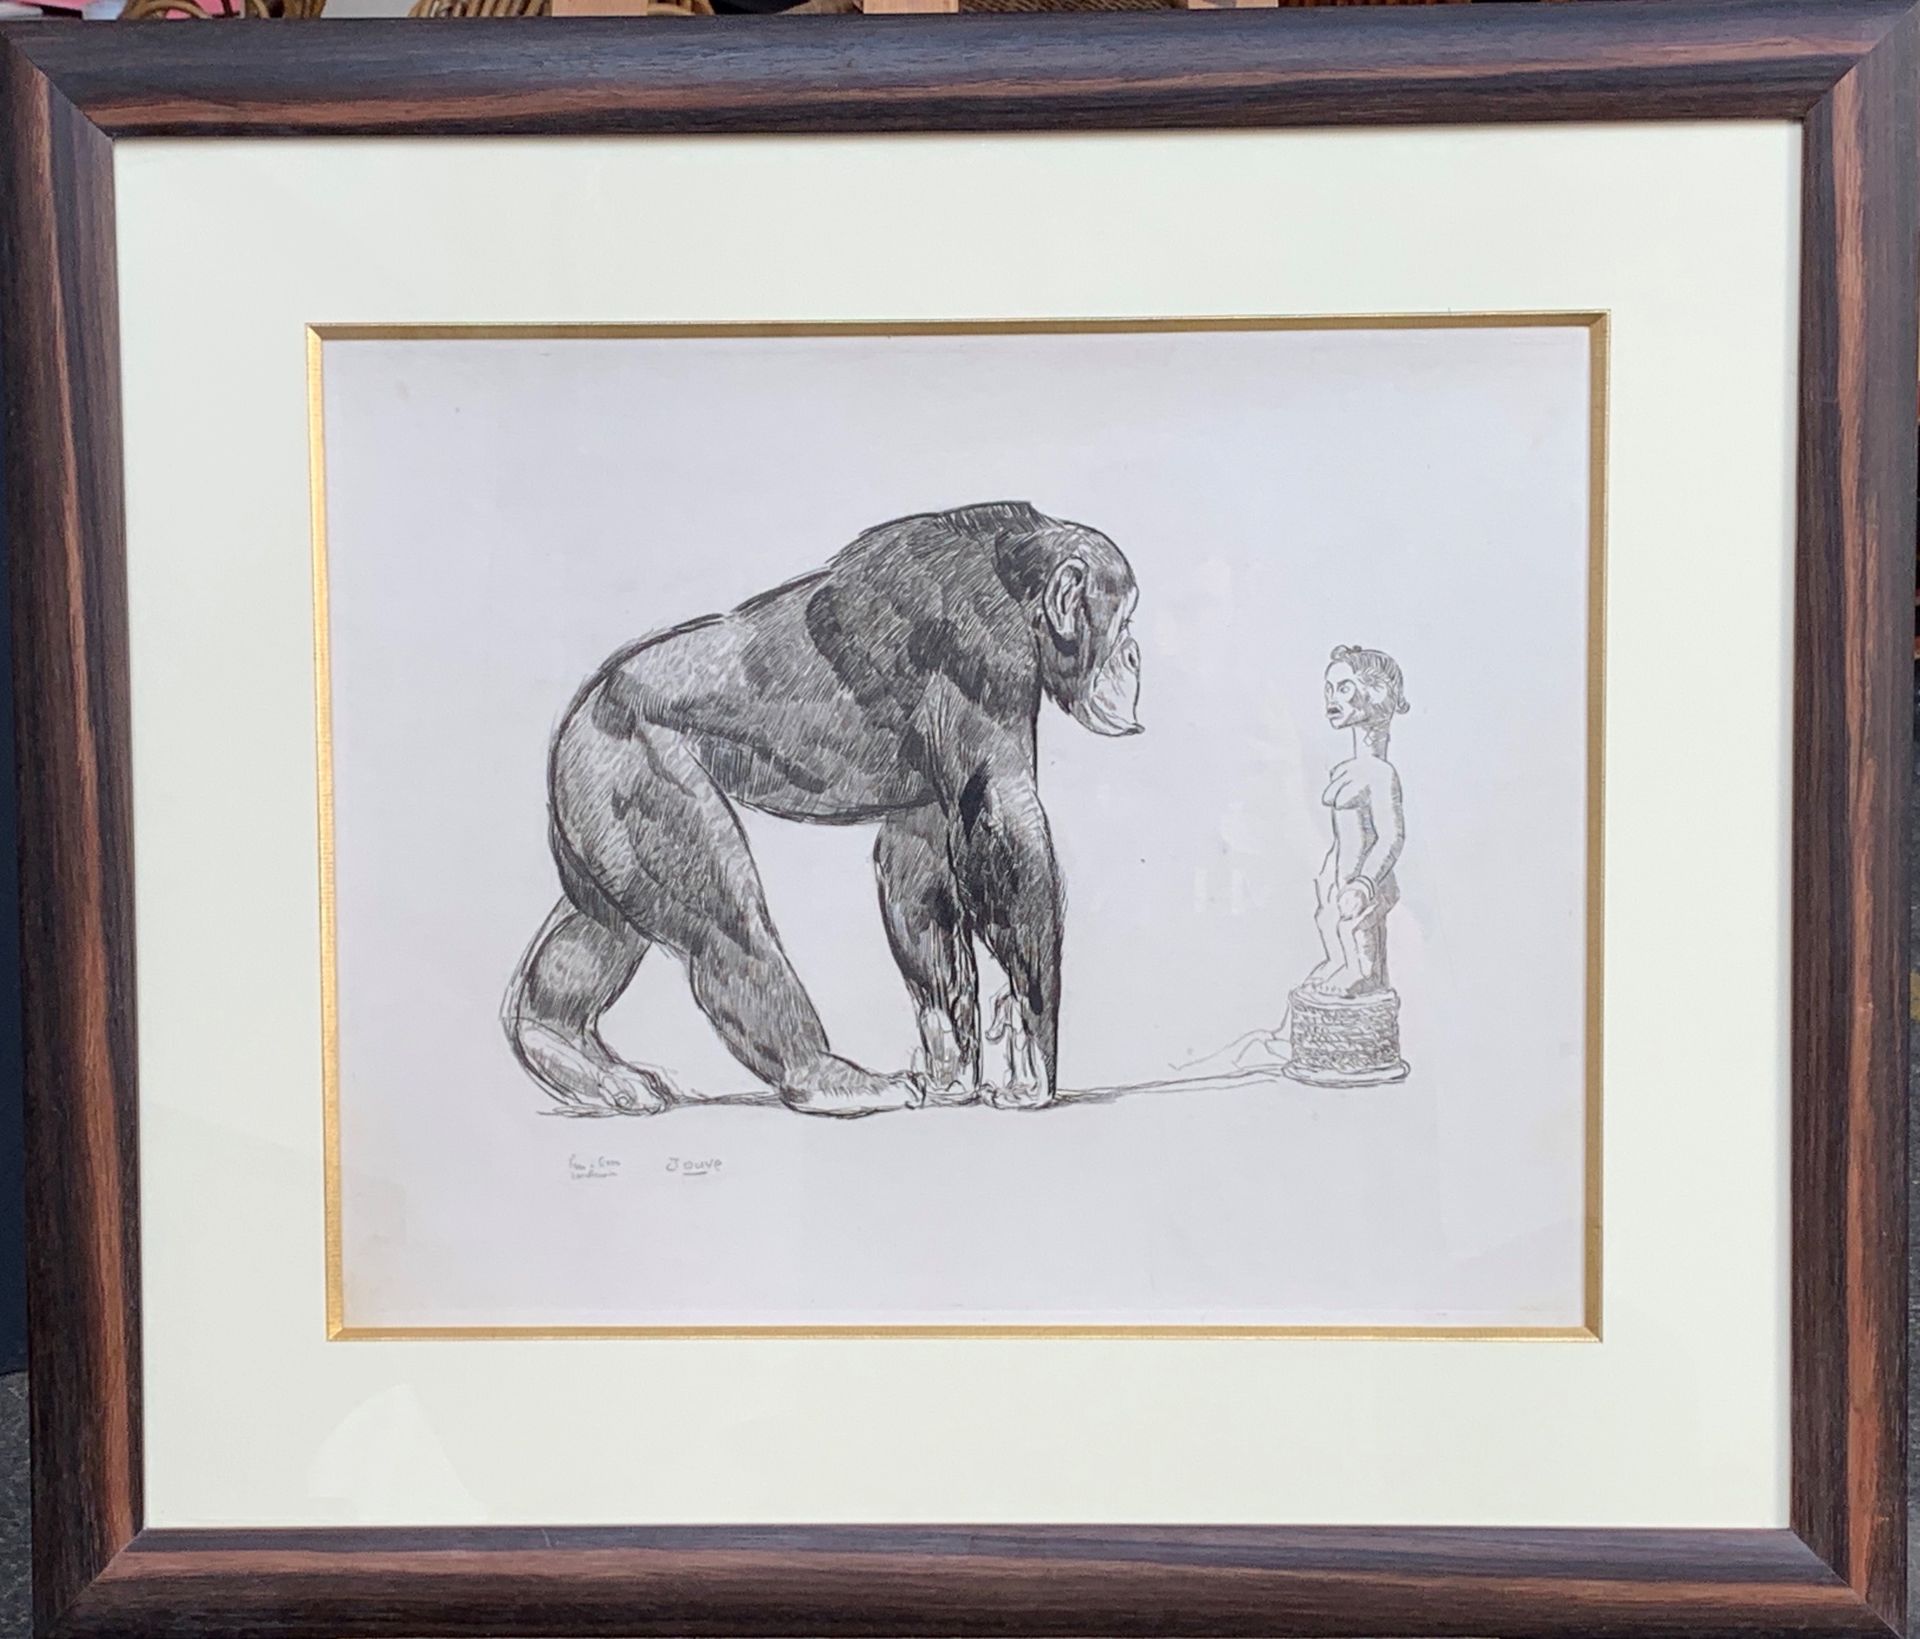 Paul JOUVE (1878-1973) 黑猩猩和鲍尔雕像，1931年

羊皮纸上的蚀刻画，大页边。

左下角有签名并注明 "bon à tirer sur&hellip;